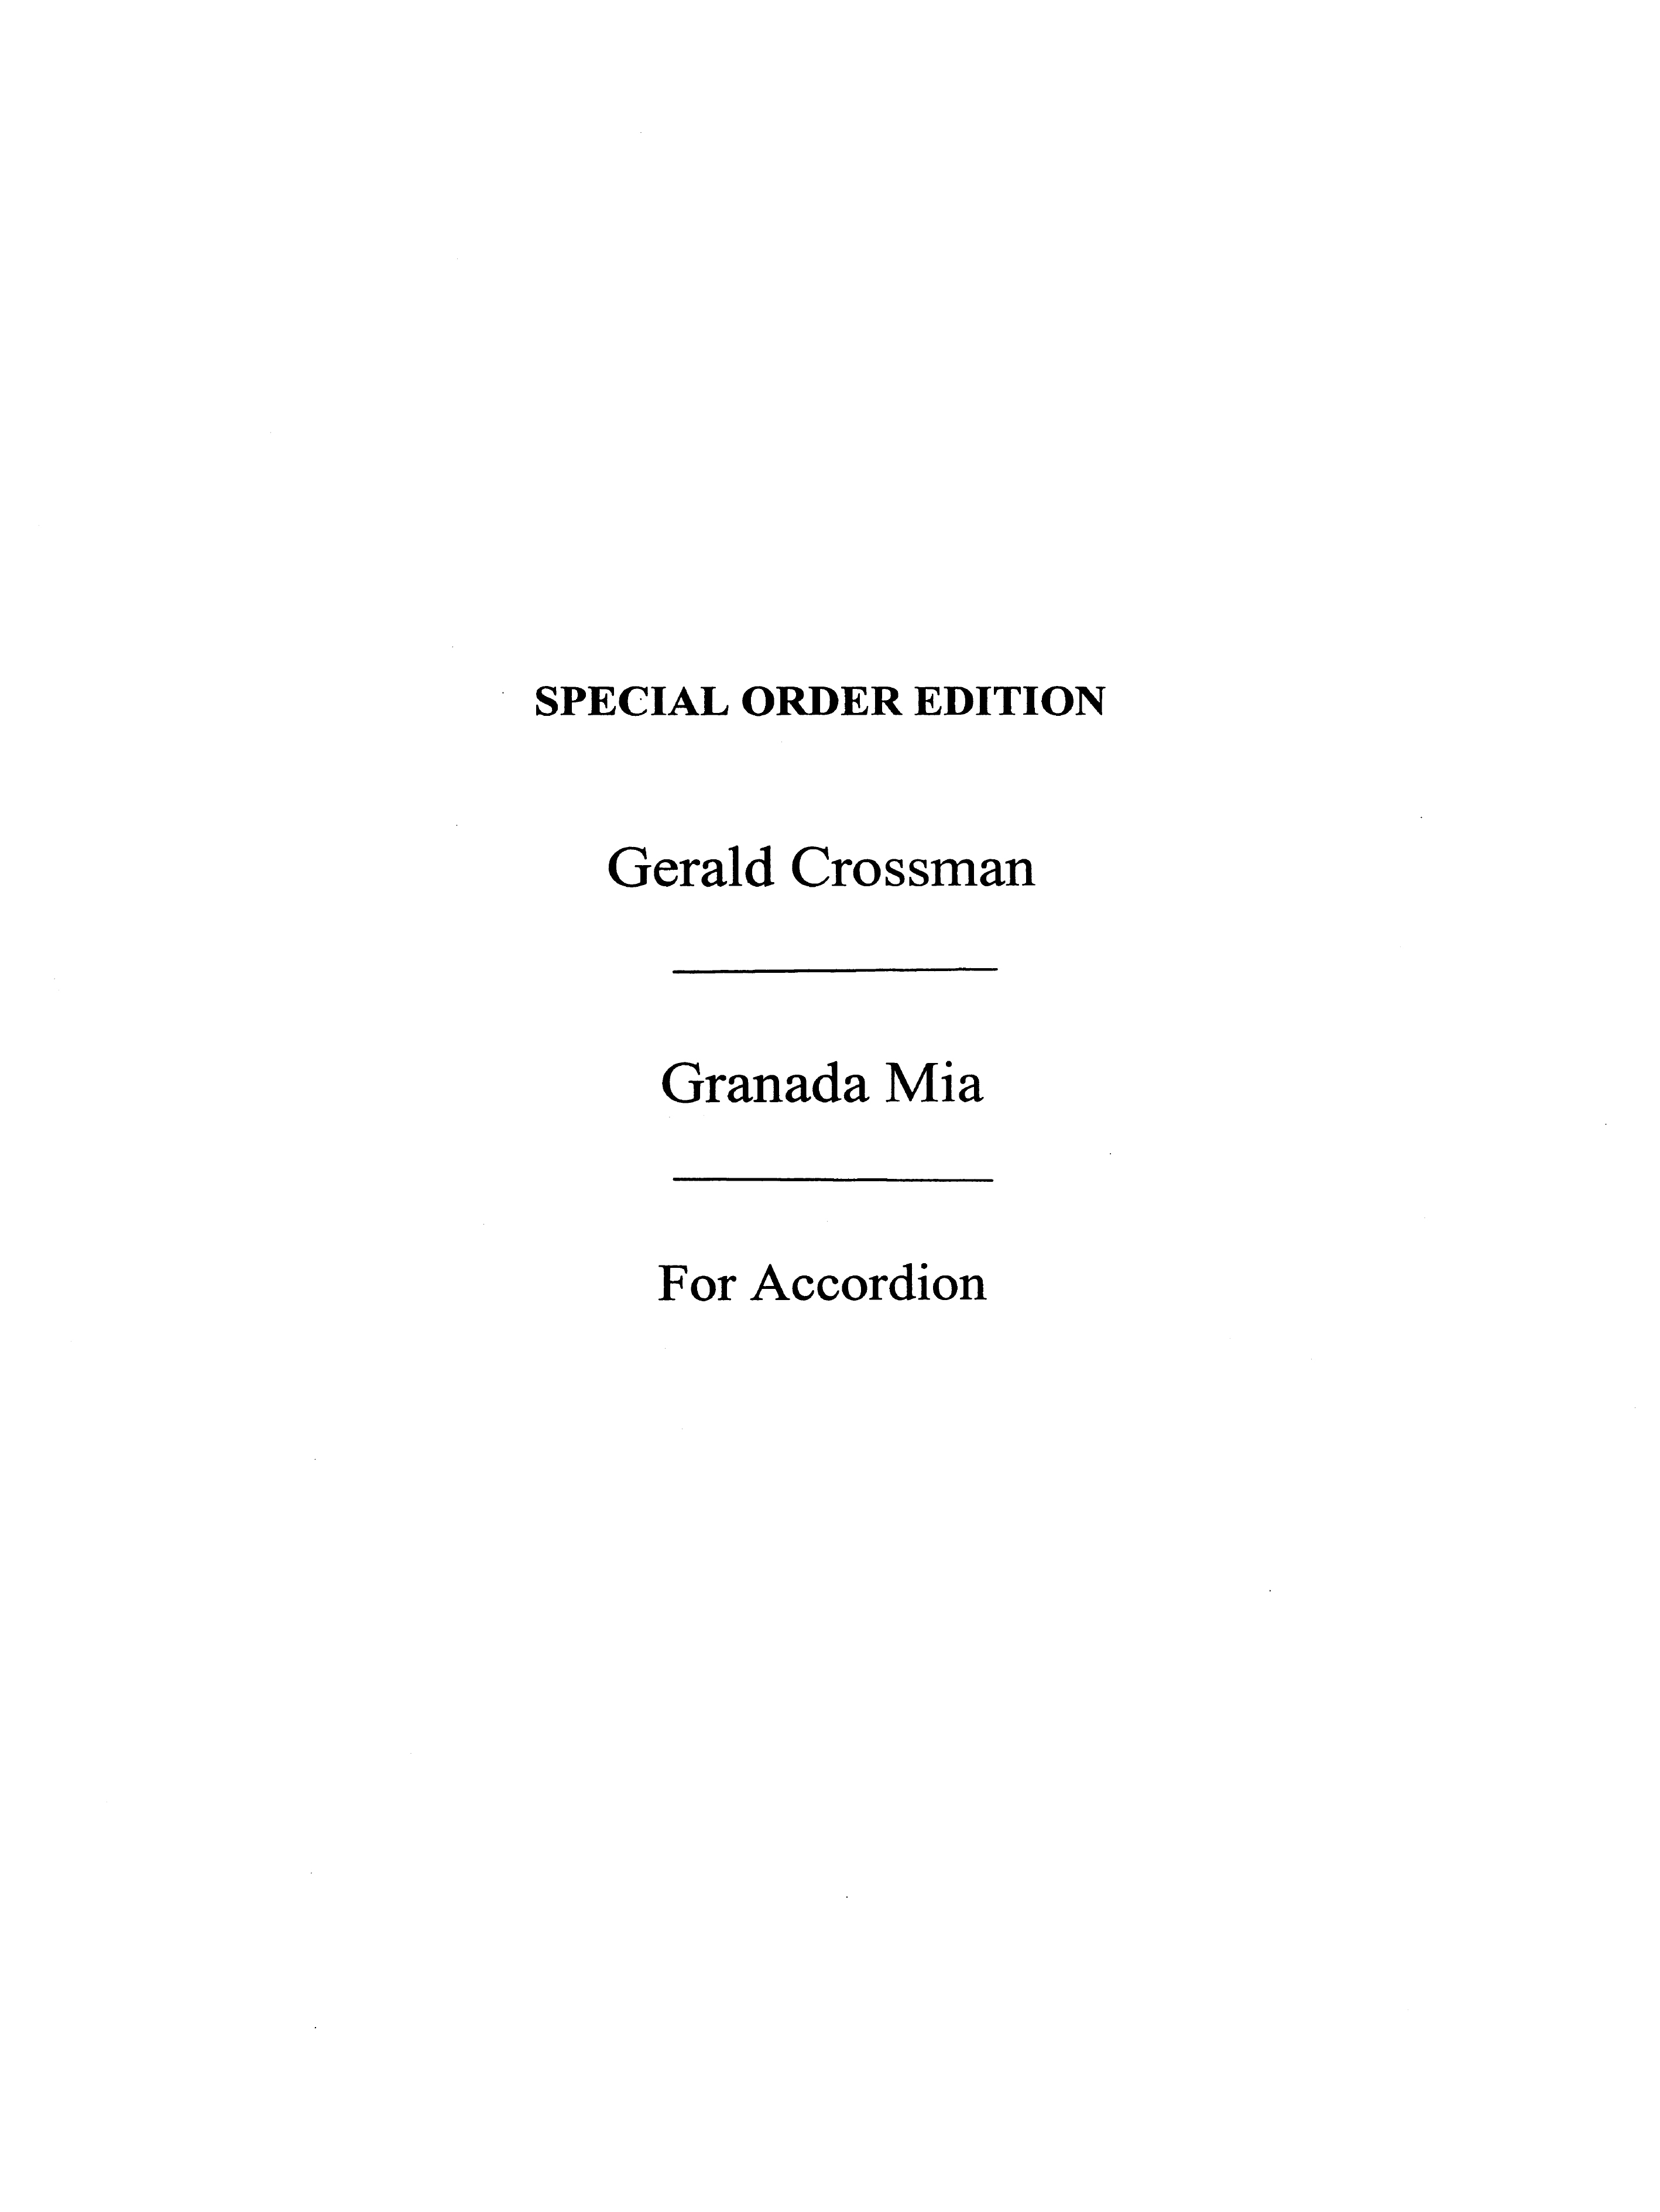 Granada Mia: Accordion: Instrumental Work